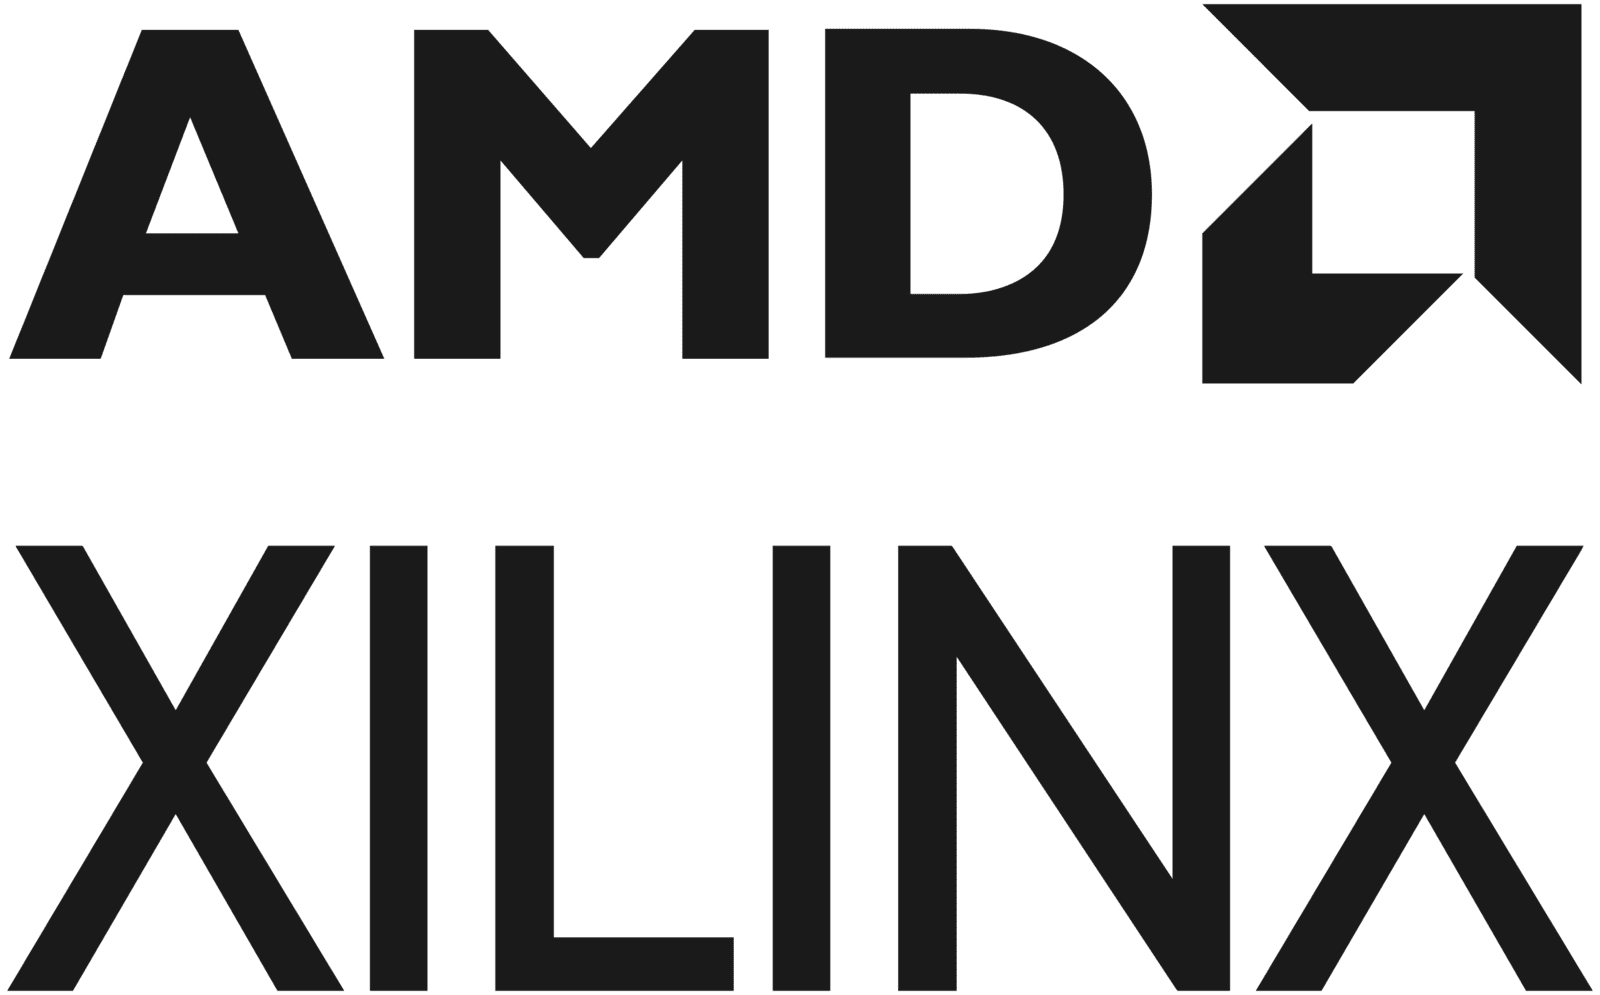 intoPIXテクノロジーパートナー Xilinx社